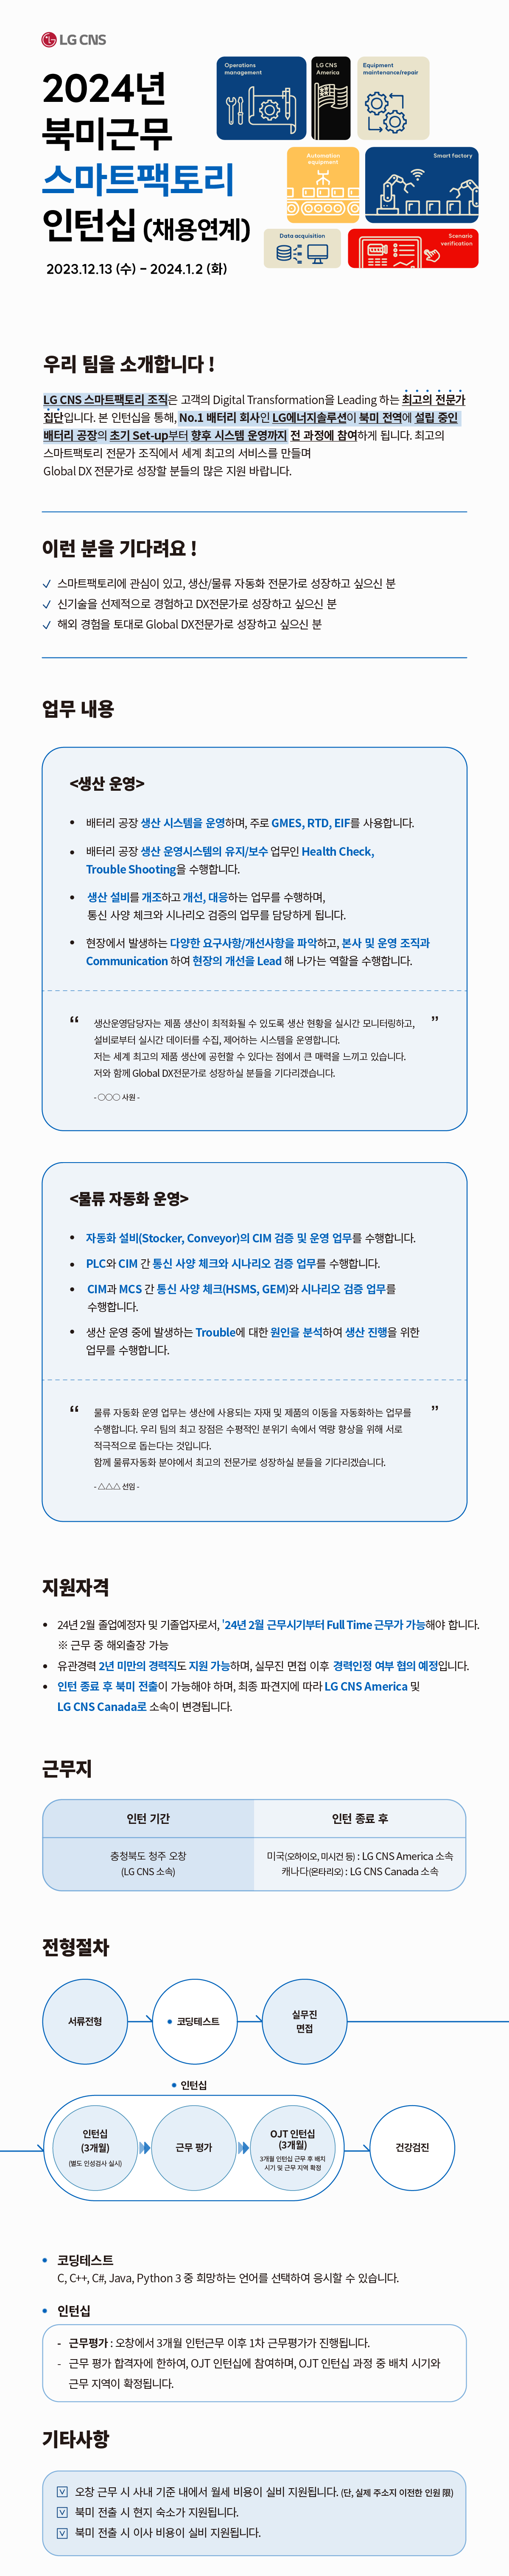 LG CNS_채용공고_2024년 북미근무 스마트팩토리.png